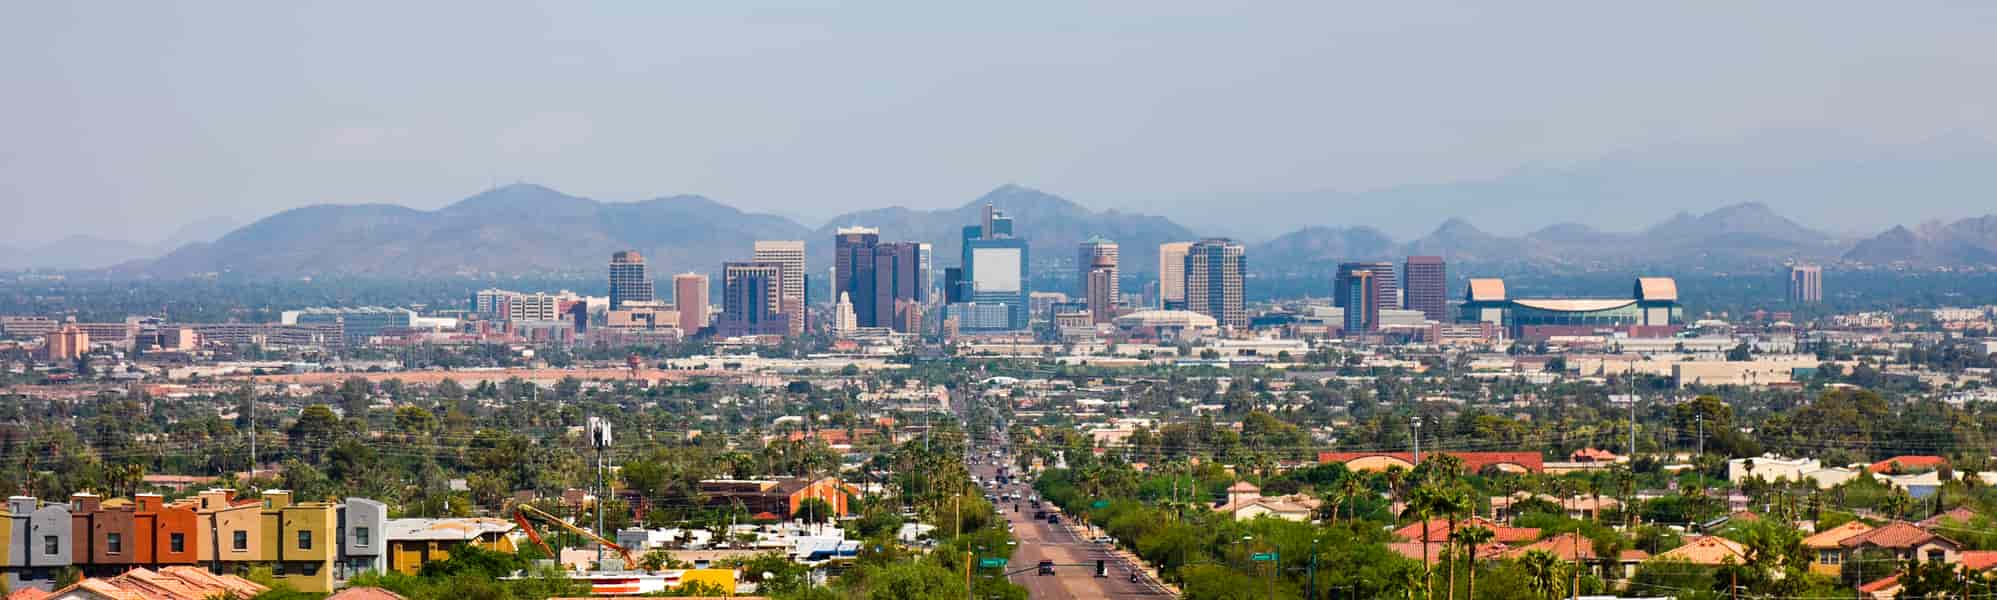 Phoenix Housing Market Prices, Trends & Forecasts 2022